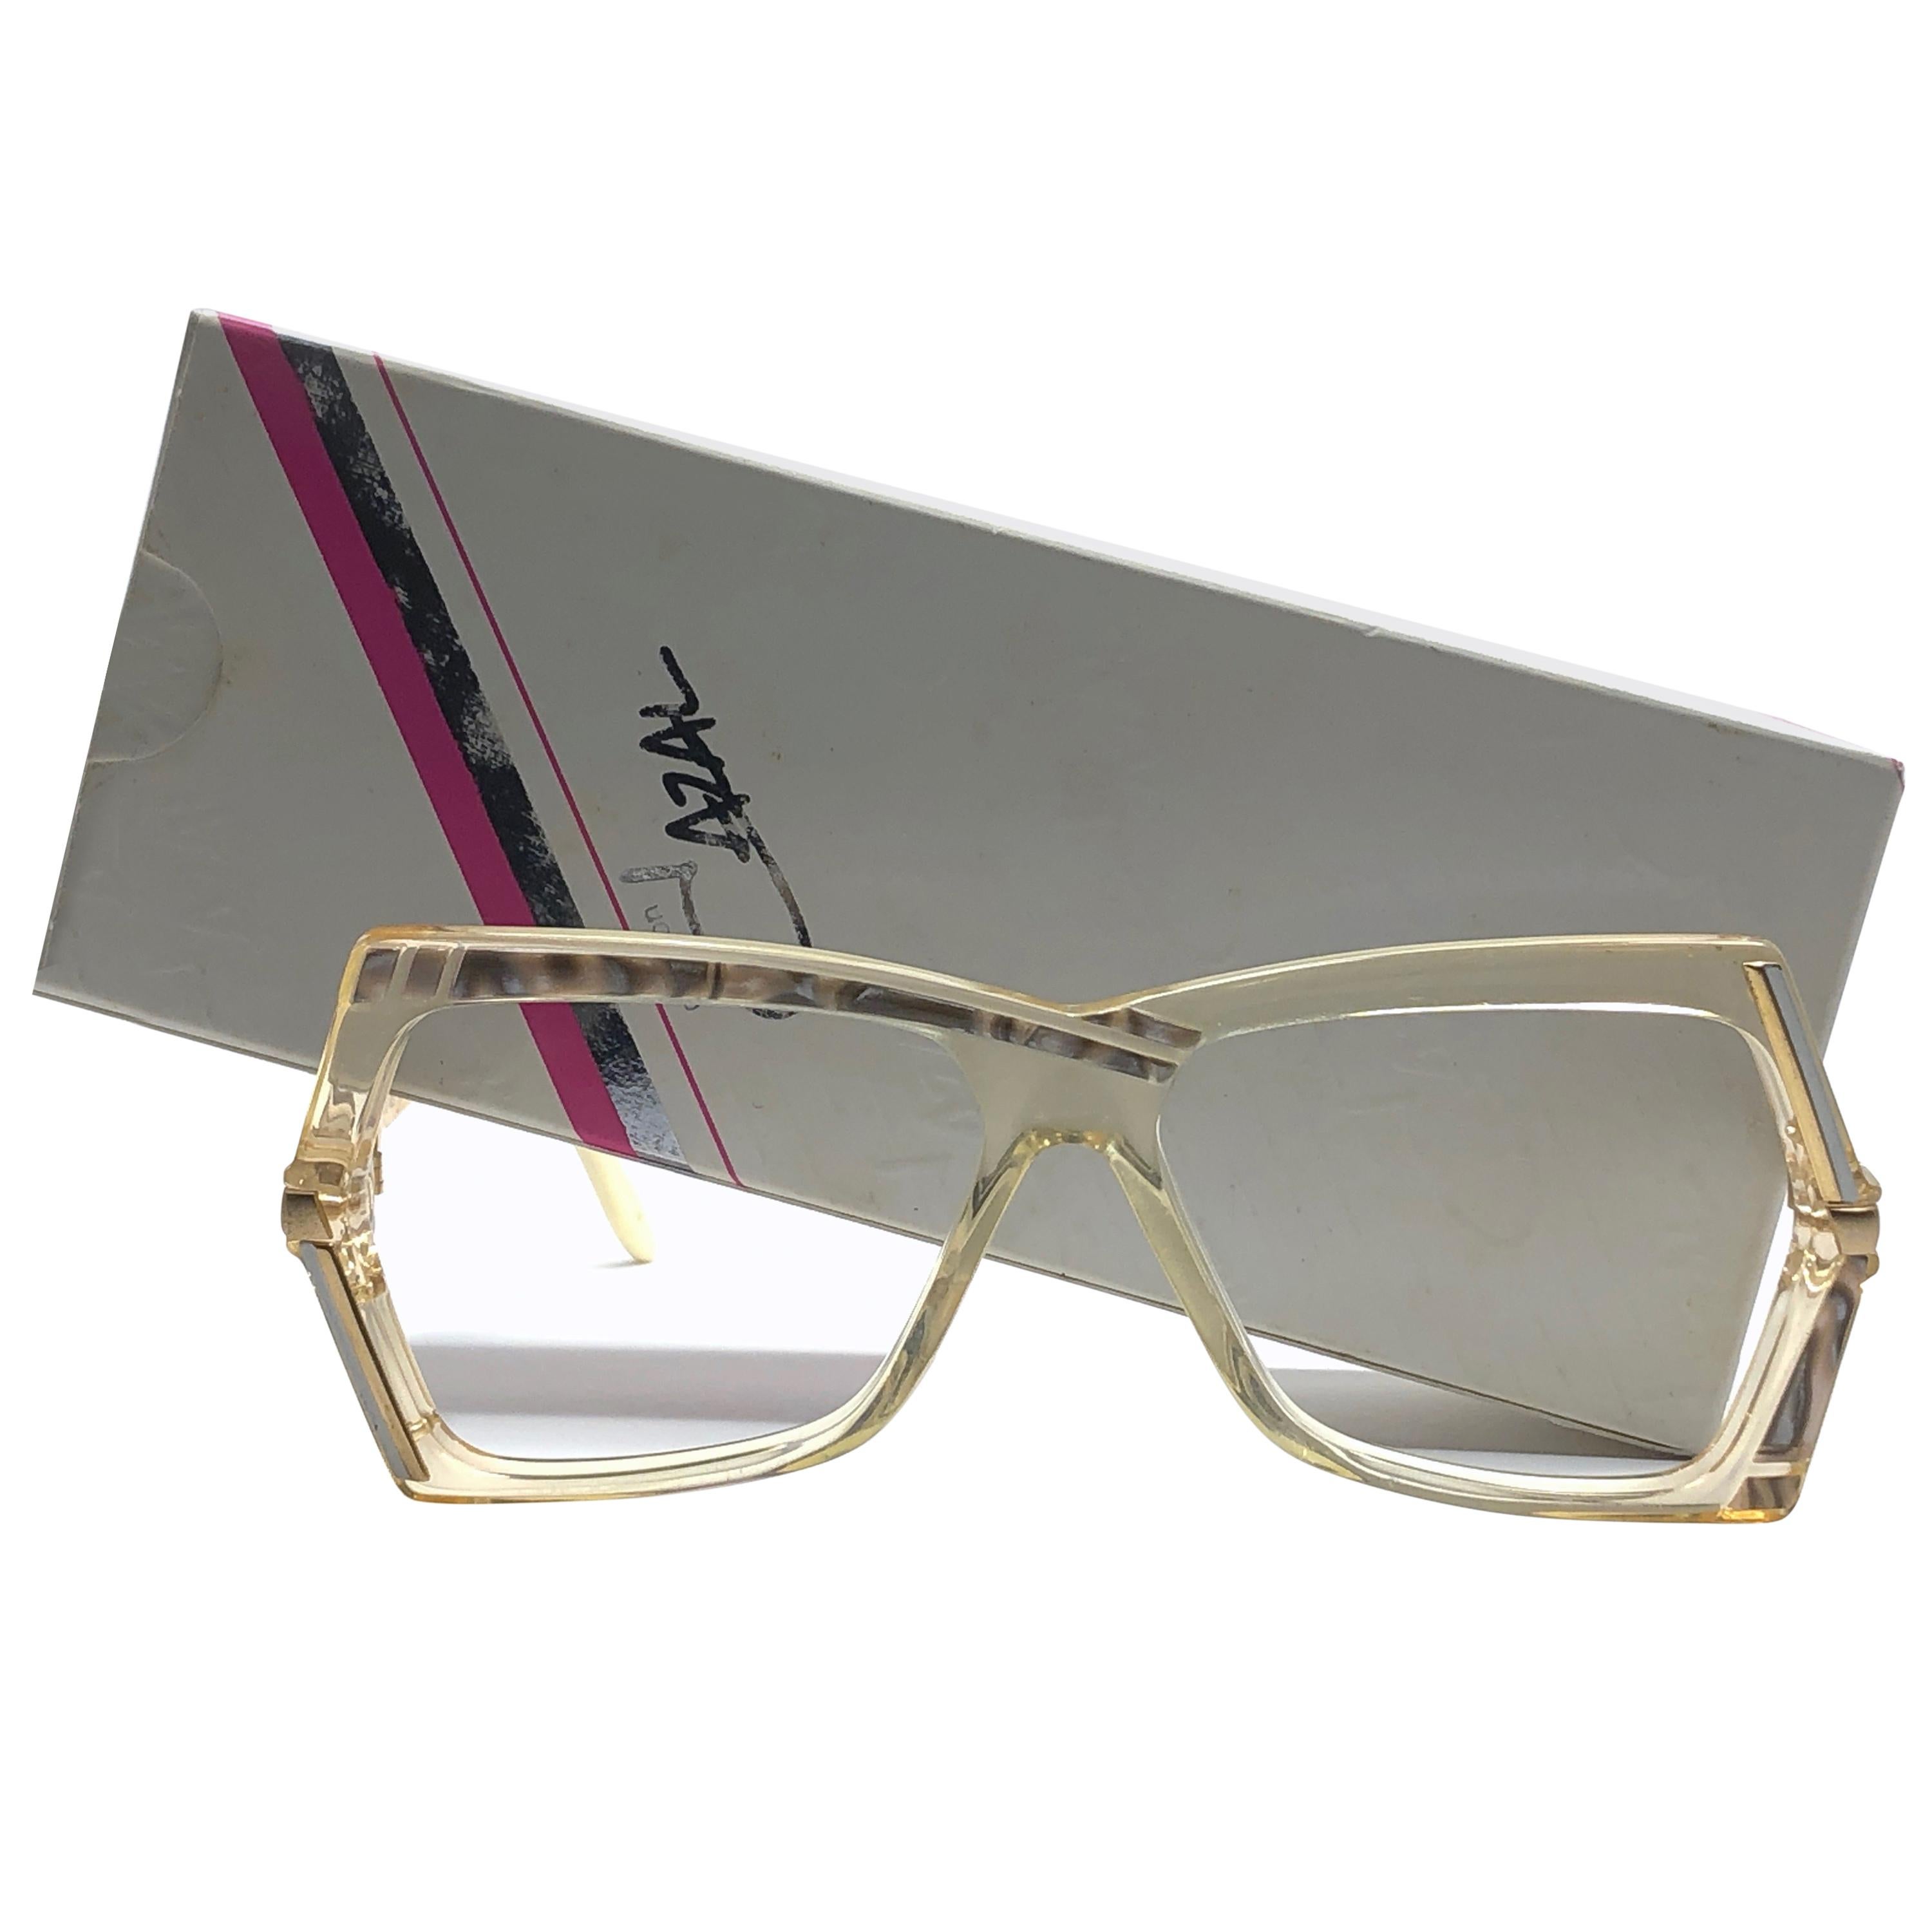 New Vintage Cazal 183 Translucent Gold Frame Reading 1970's Sunglasses